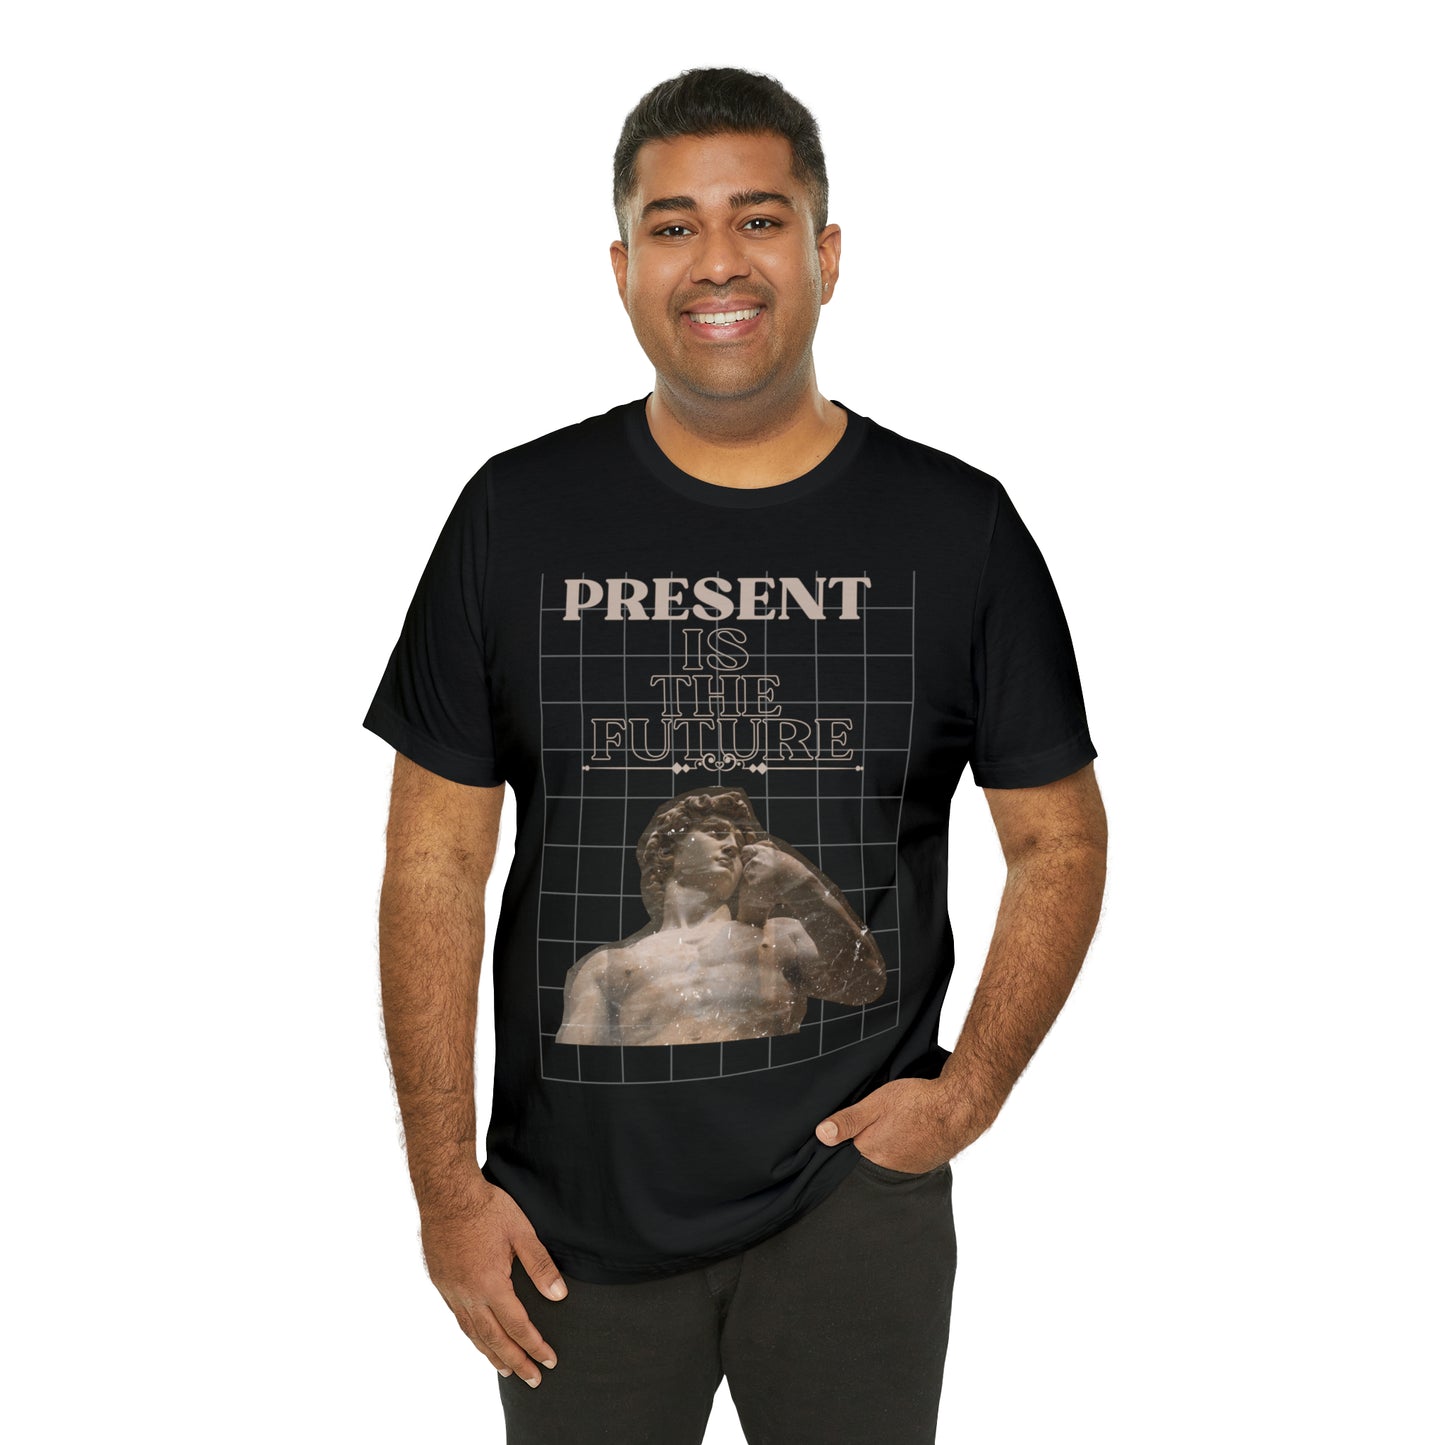 "Present" T Shirt